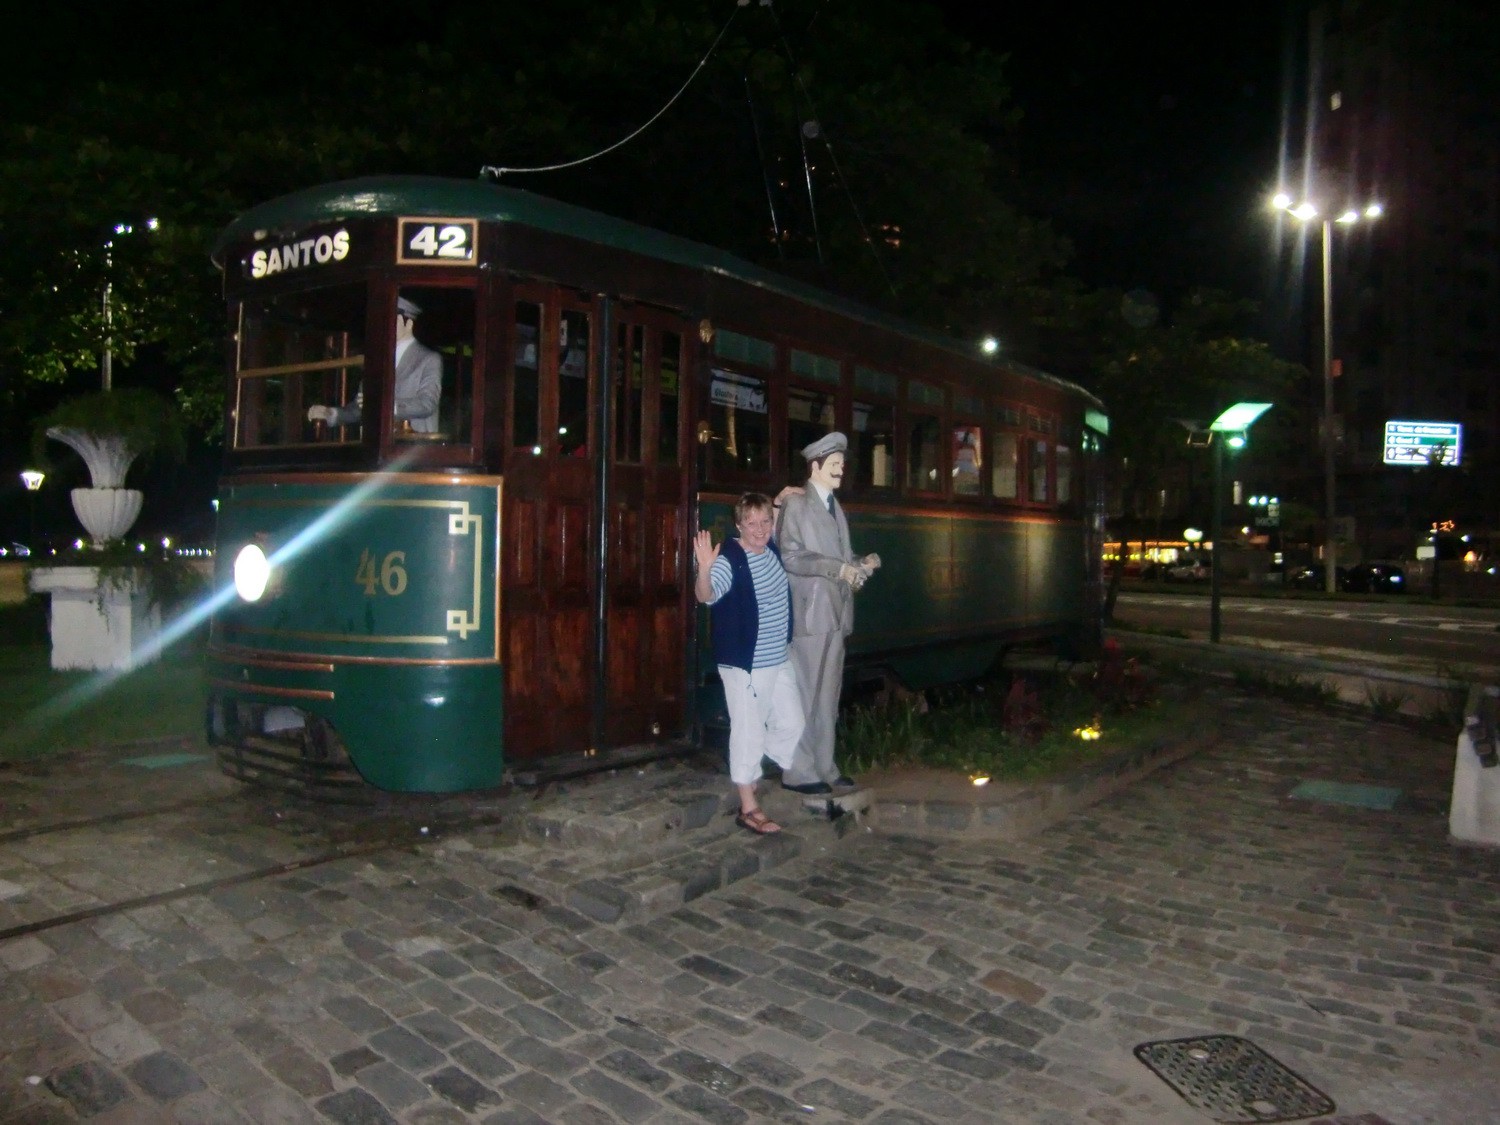 Old tram of Santos